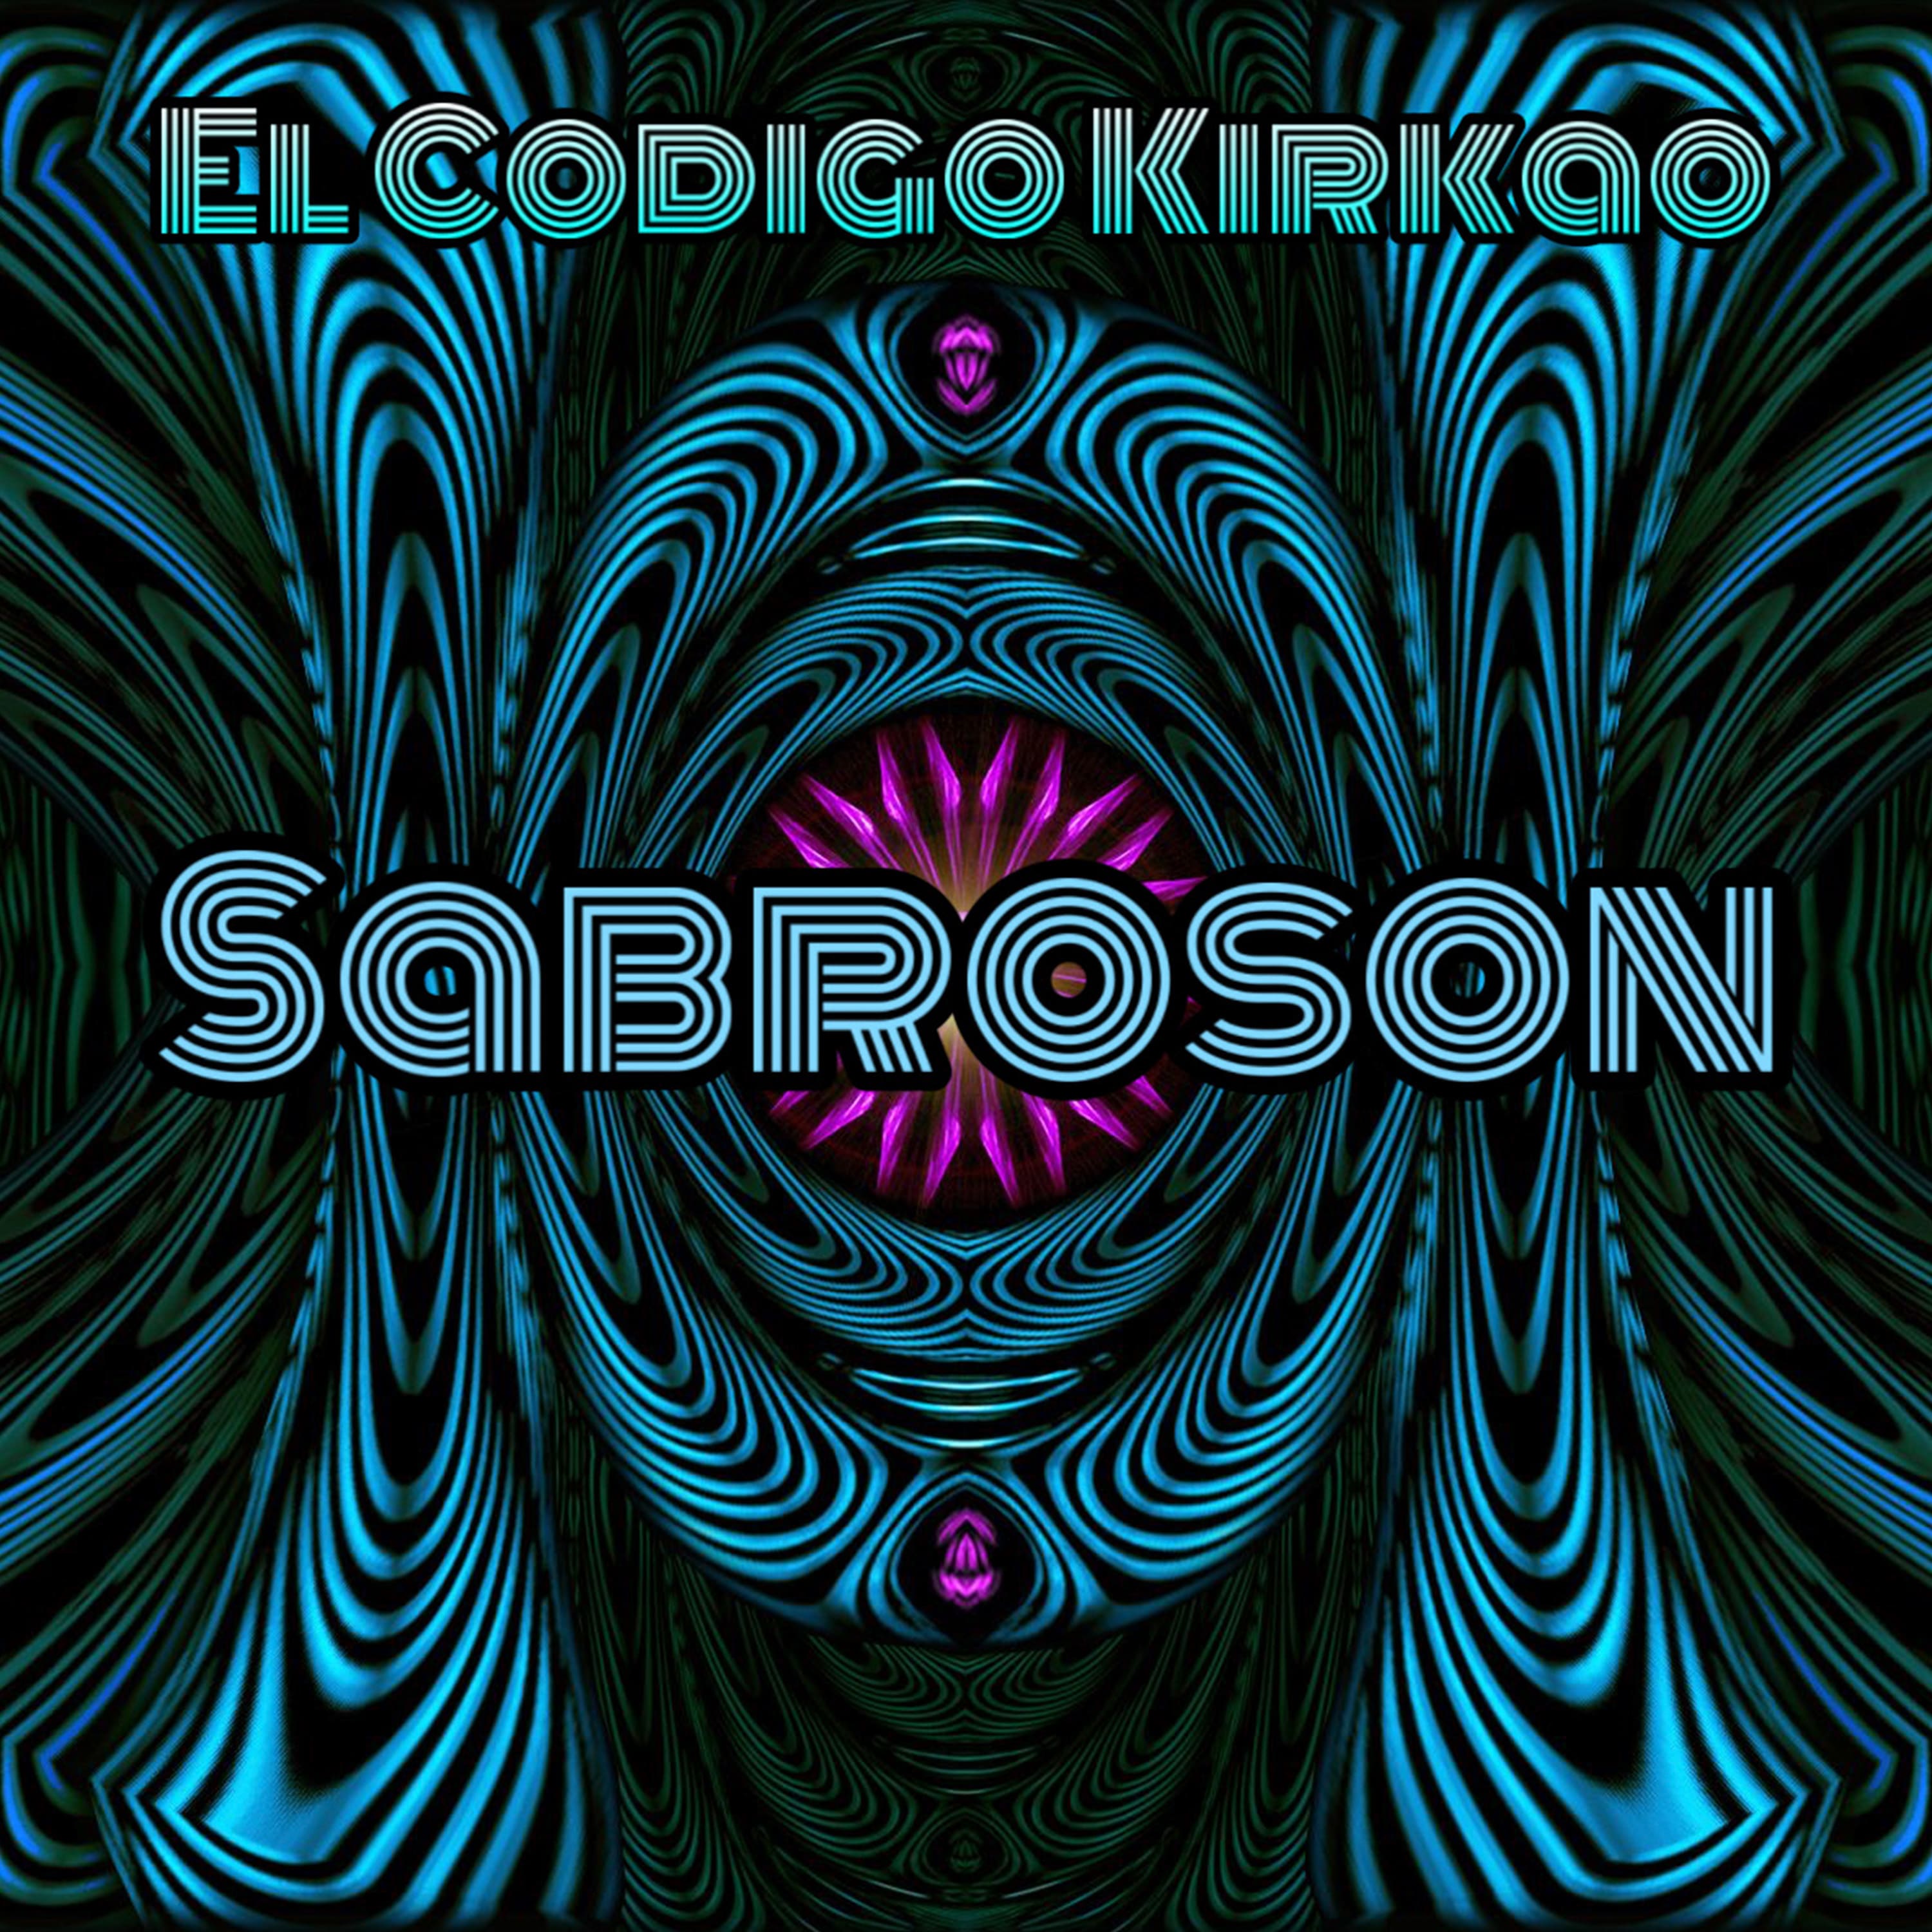 El Codigo Kirkao - Sabroson (Afro House)